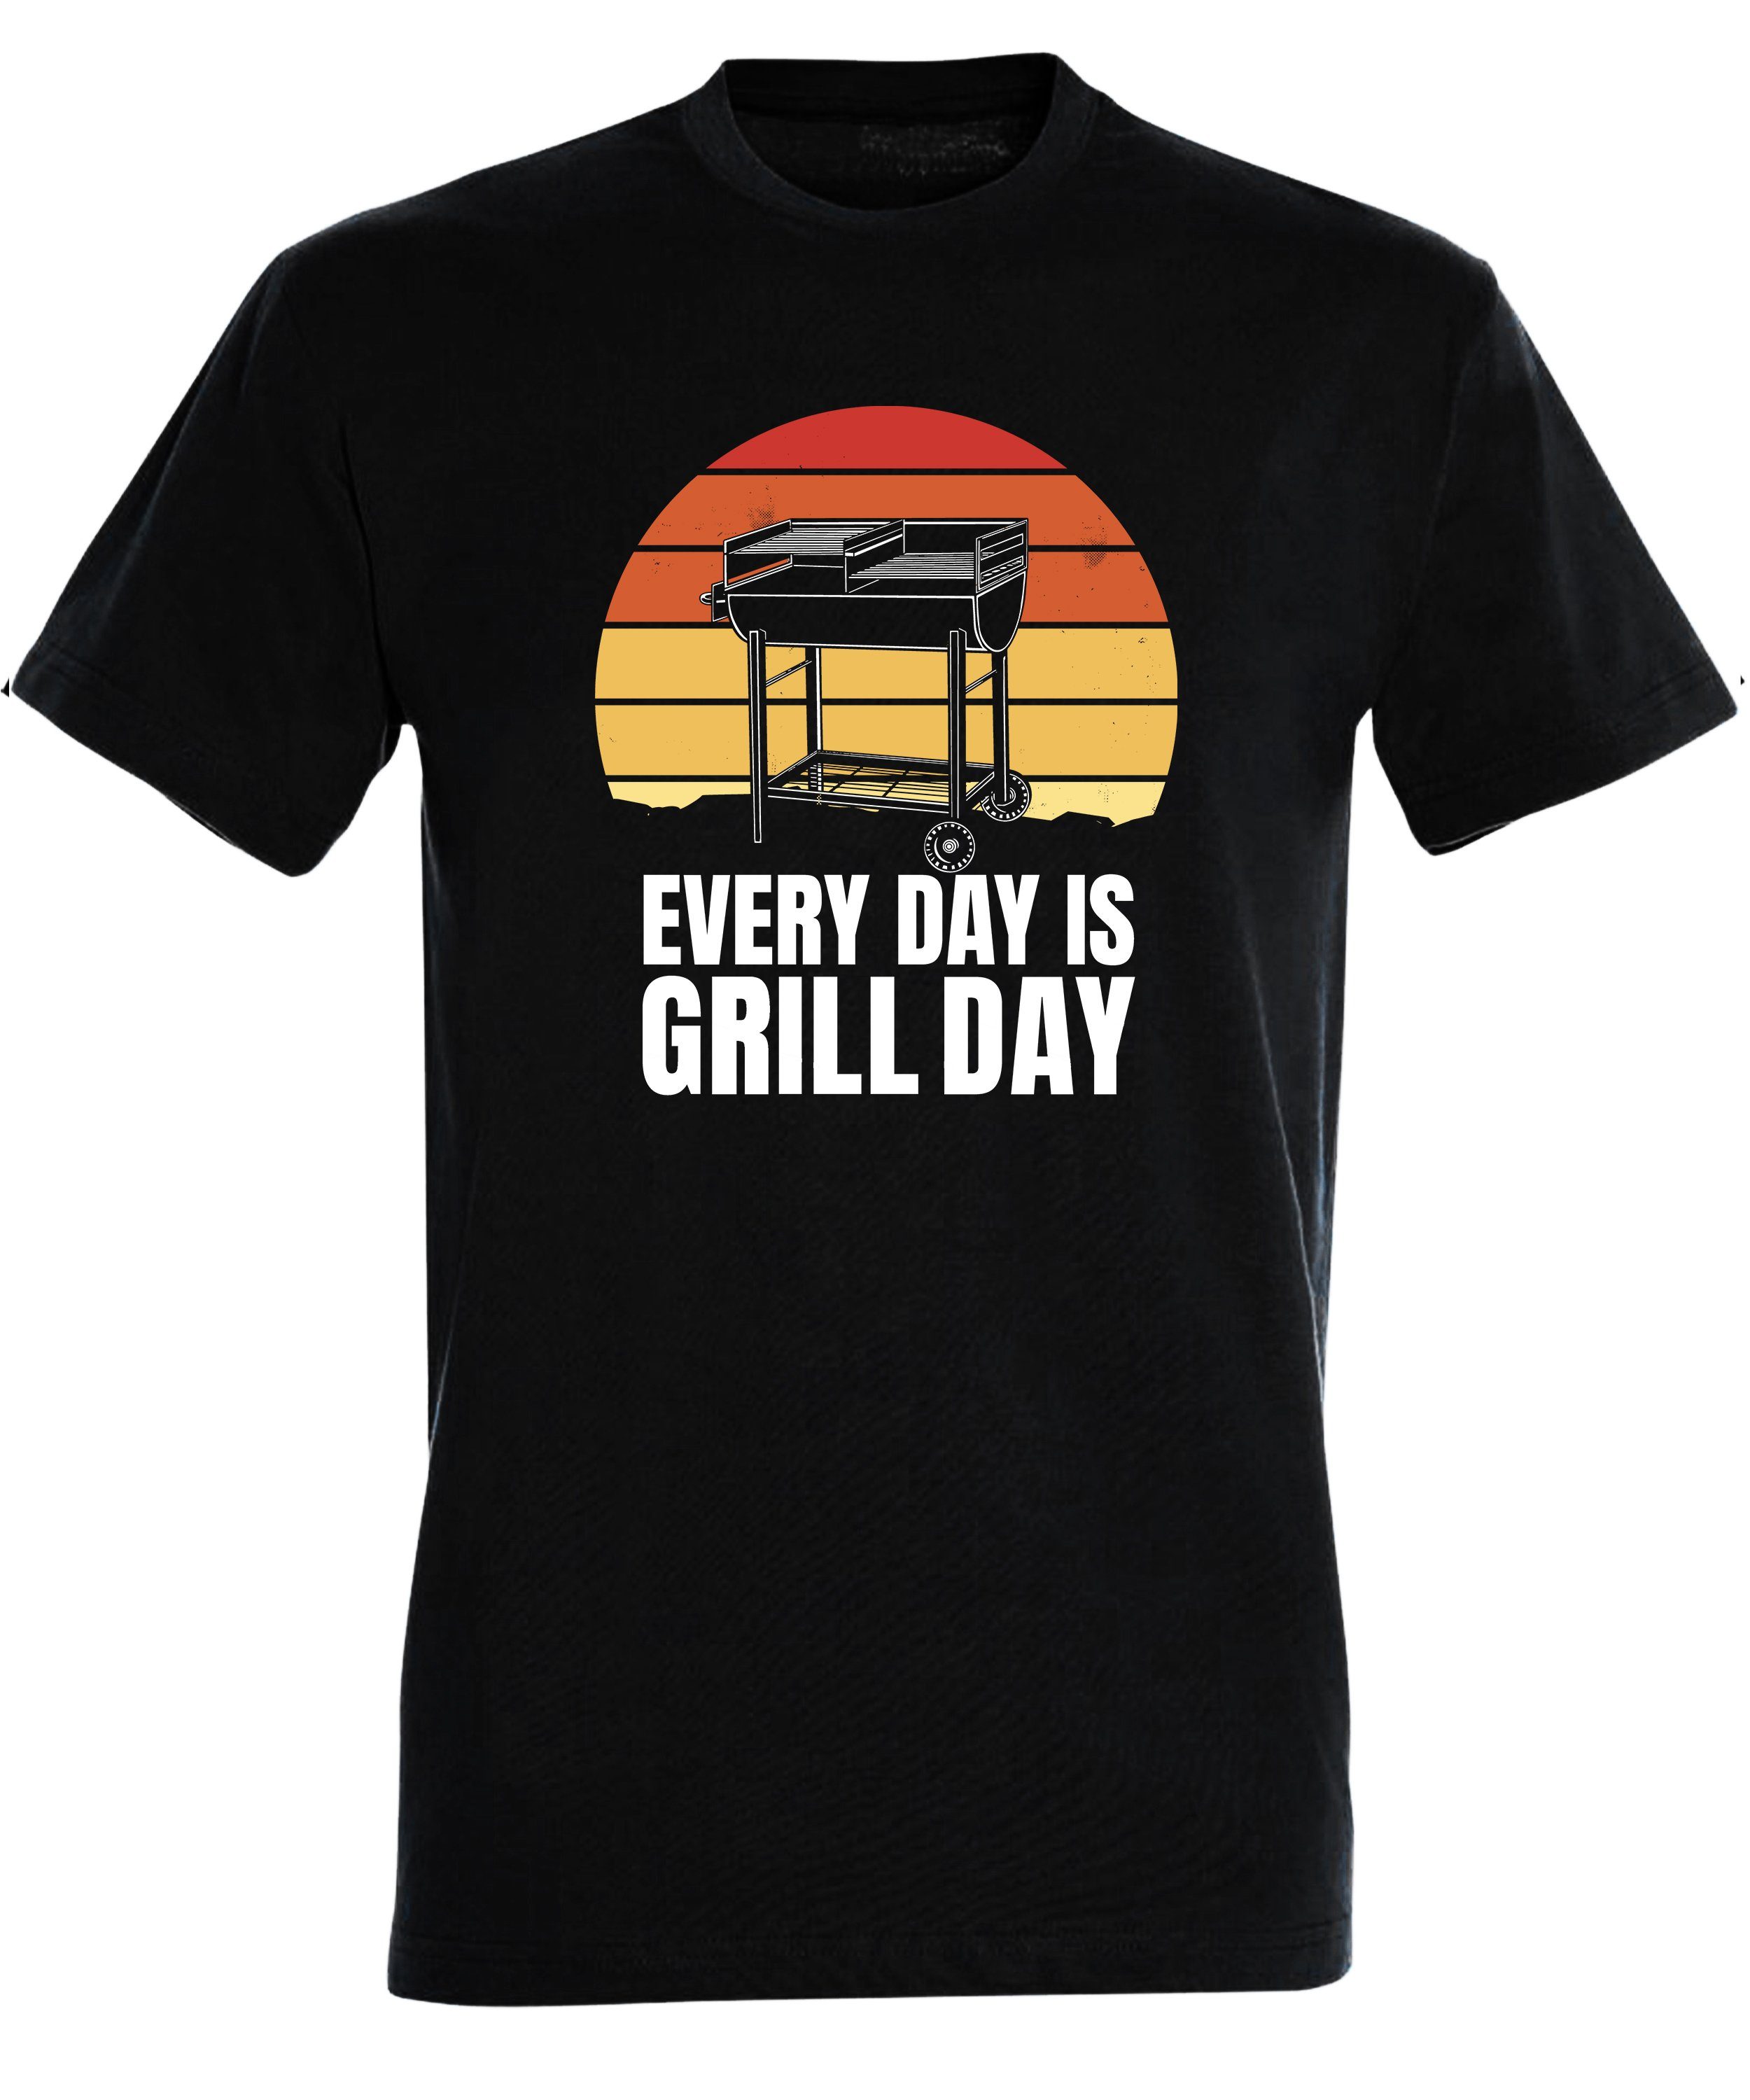 Print Day Fit, Herren Grill Baumwollshirt Aufdruck - Regular BBQ T-Shirt mit Day Grill Every T-Shirt Shirt Retro schwarz i300 MyDesign24 is a